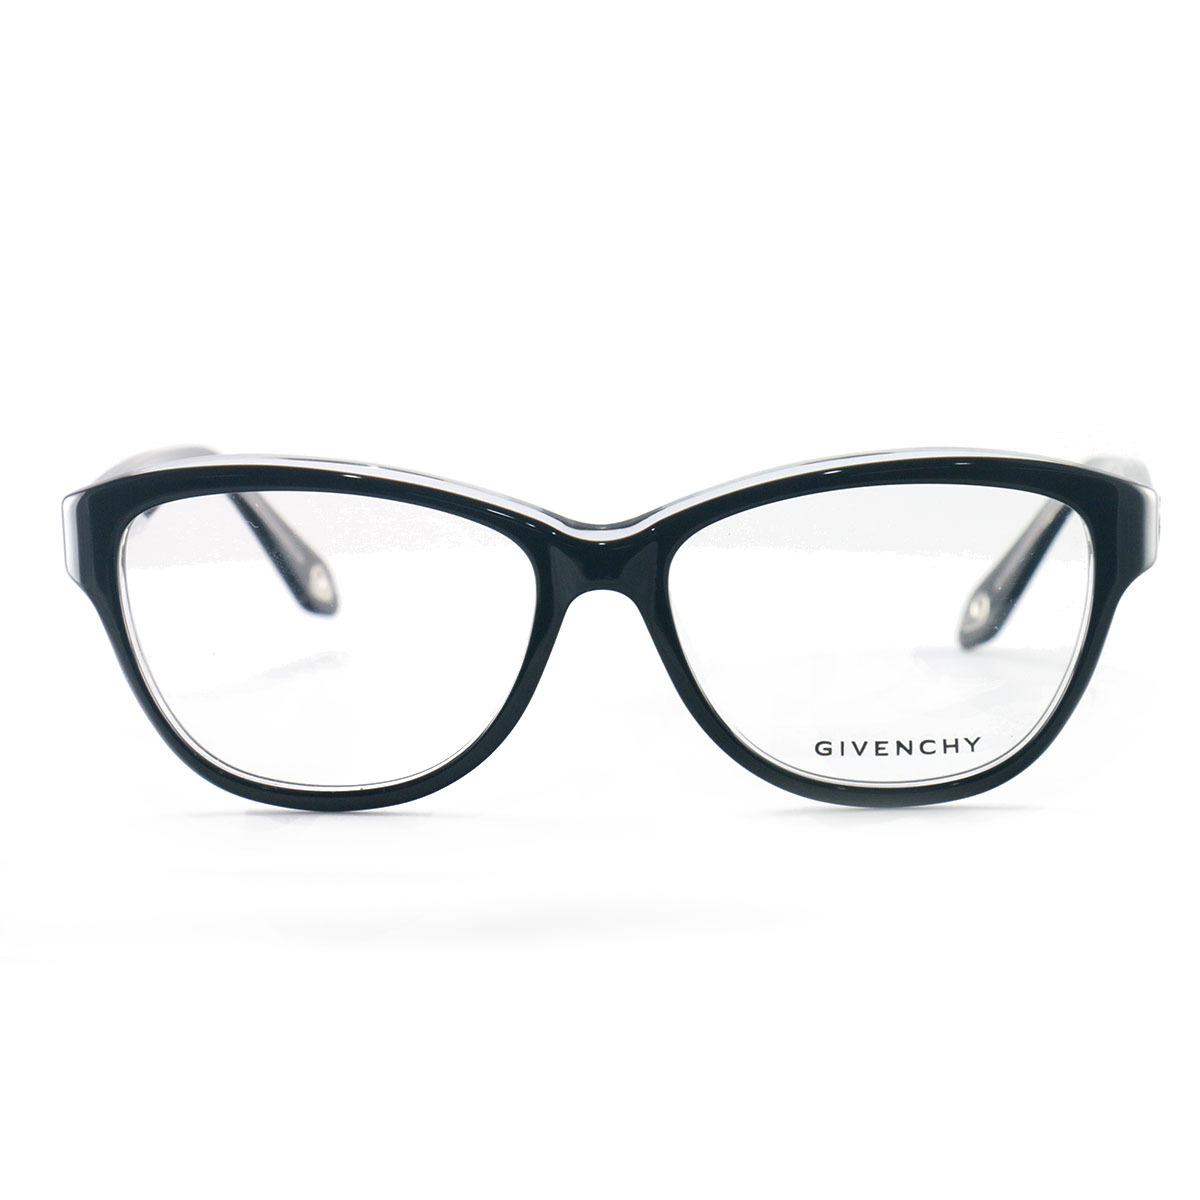 Givenchy Women's Eyeglasses VGV942C Z32 Black 52 15 140 Full Rim ...